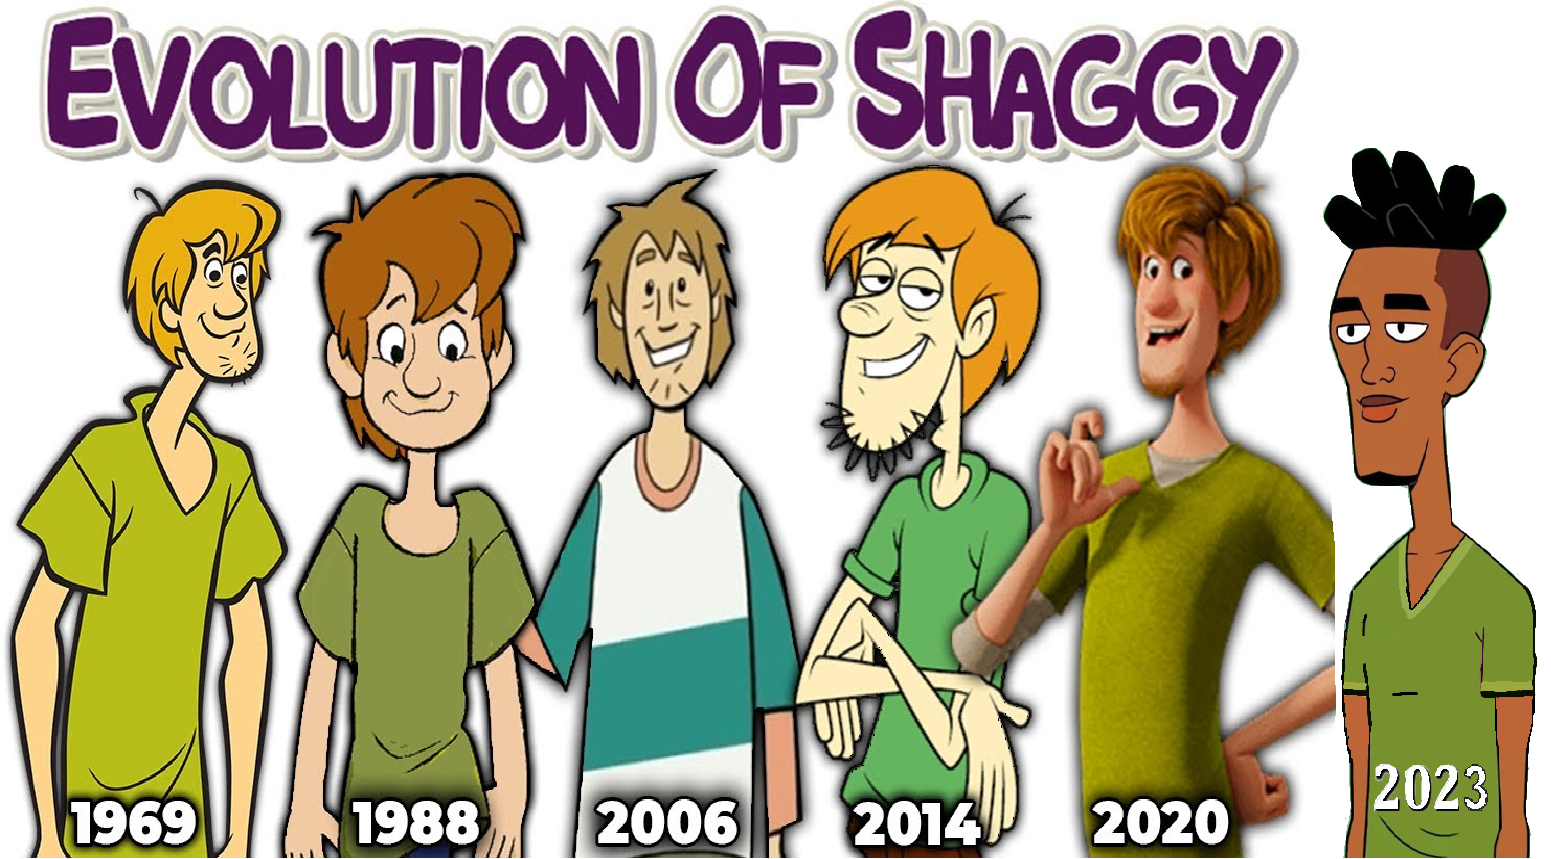 Evolution of Shaggy